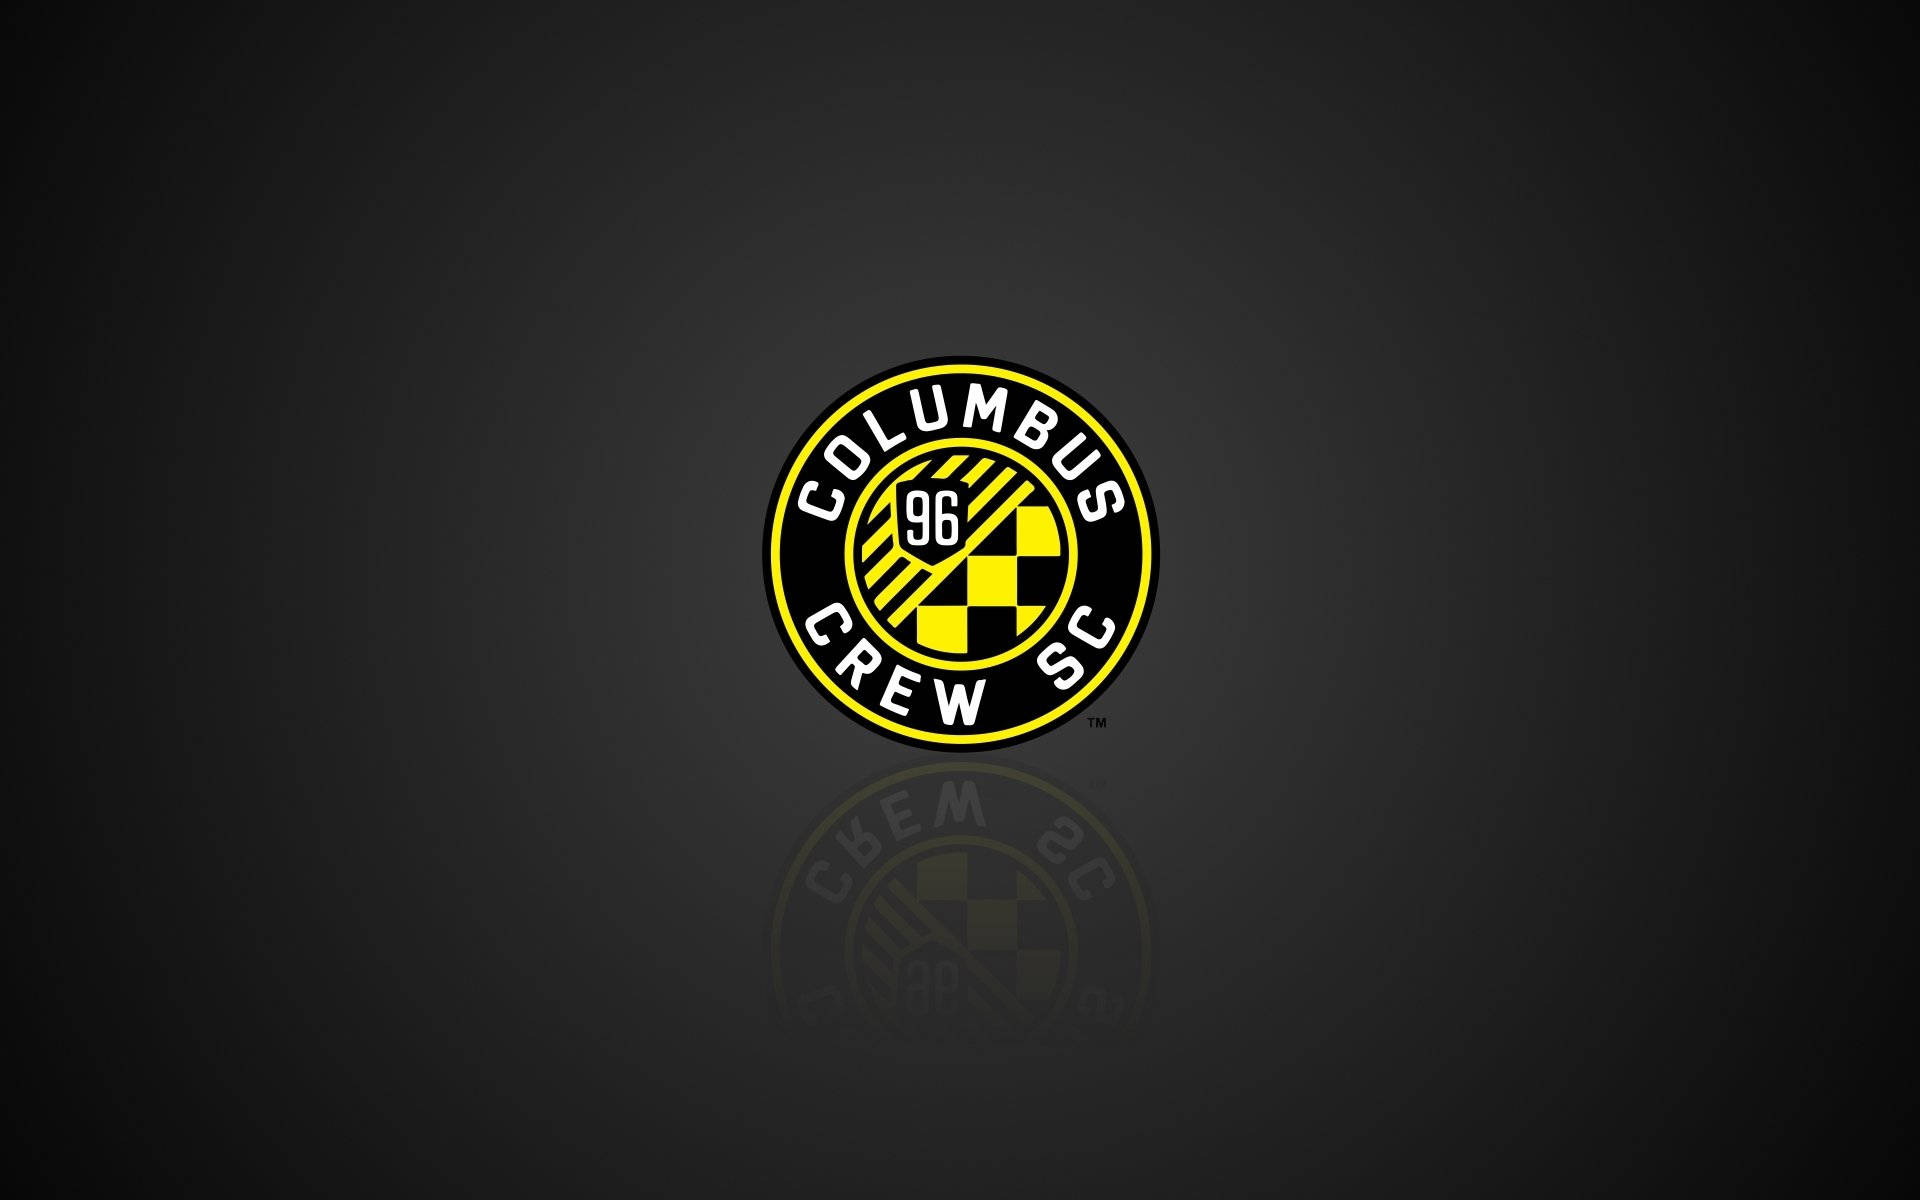 Laaplicación Del Columbus Crew Soccer Club Aparece En Un Fondo Negro. Fondo de pantalla